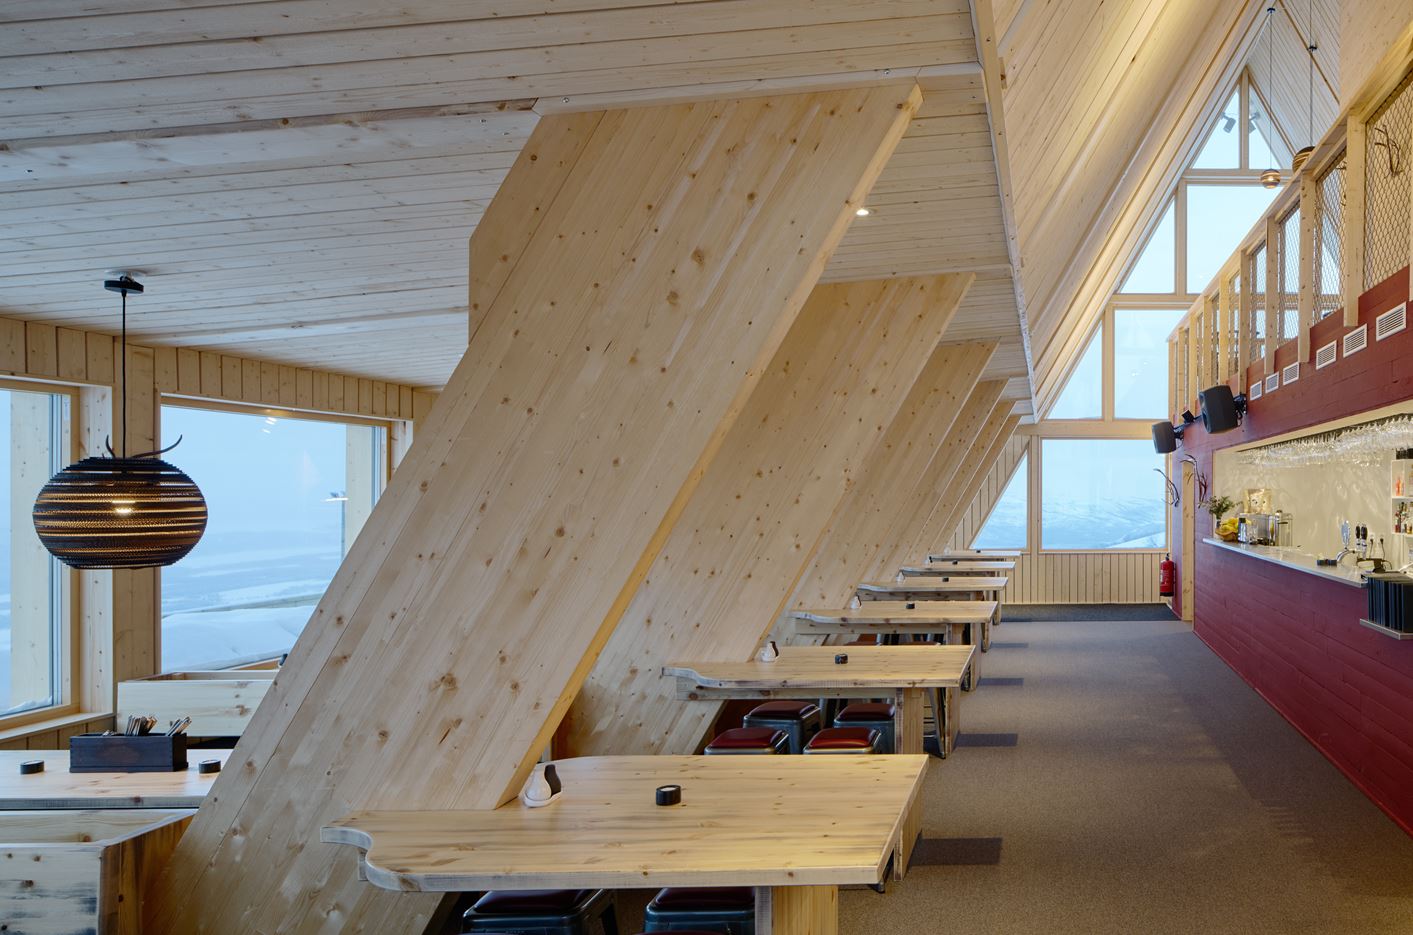 Björk Mountain Restaurant in Hemavan, Sweden by Murman Arkitekter